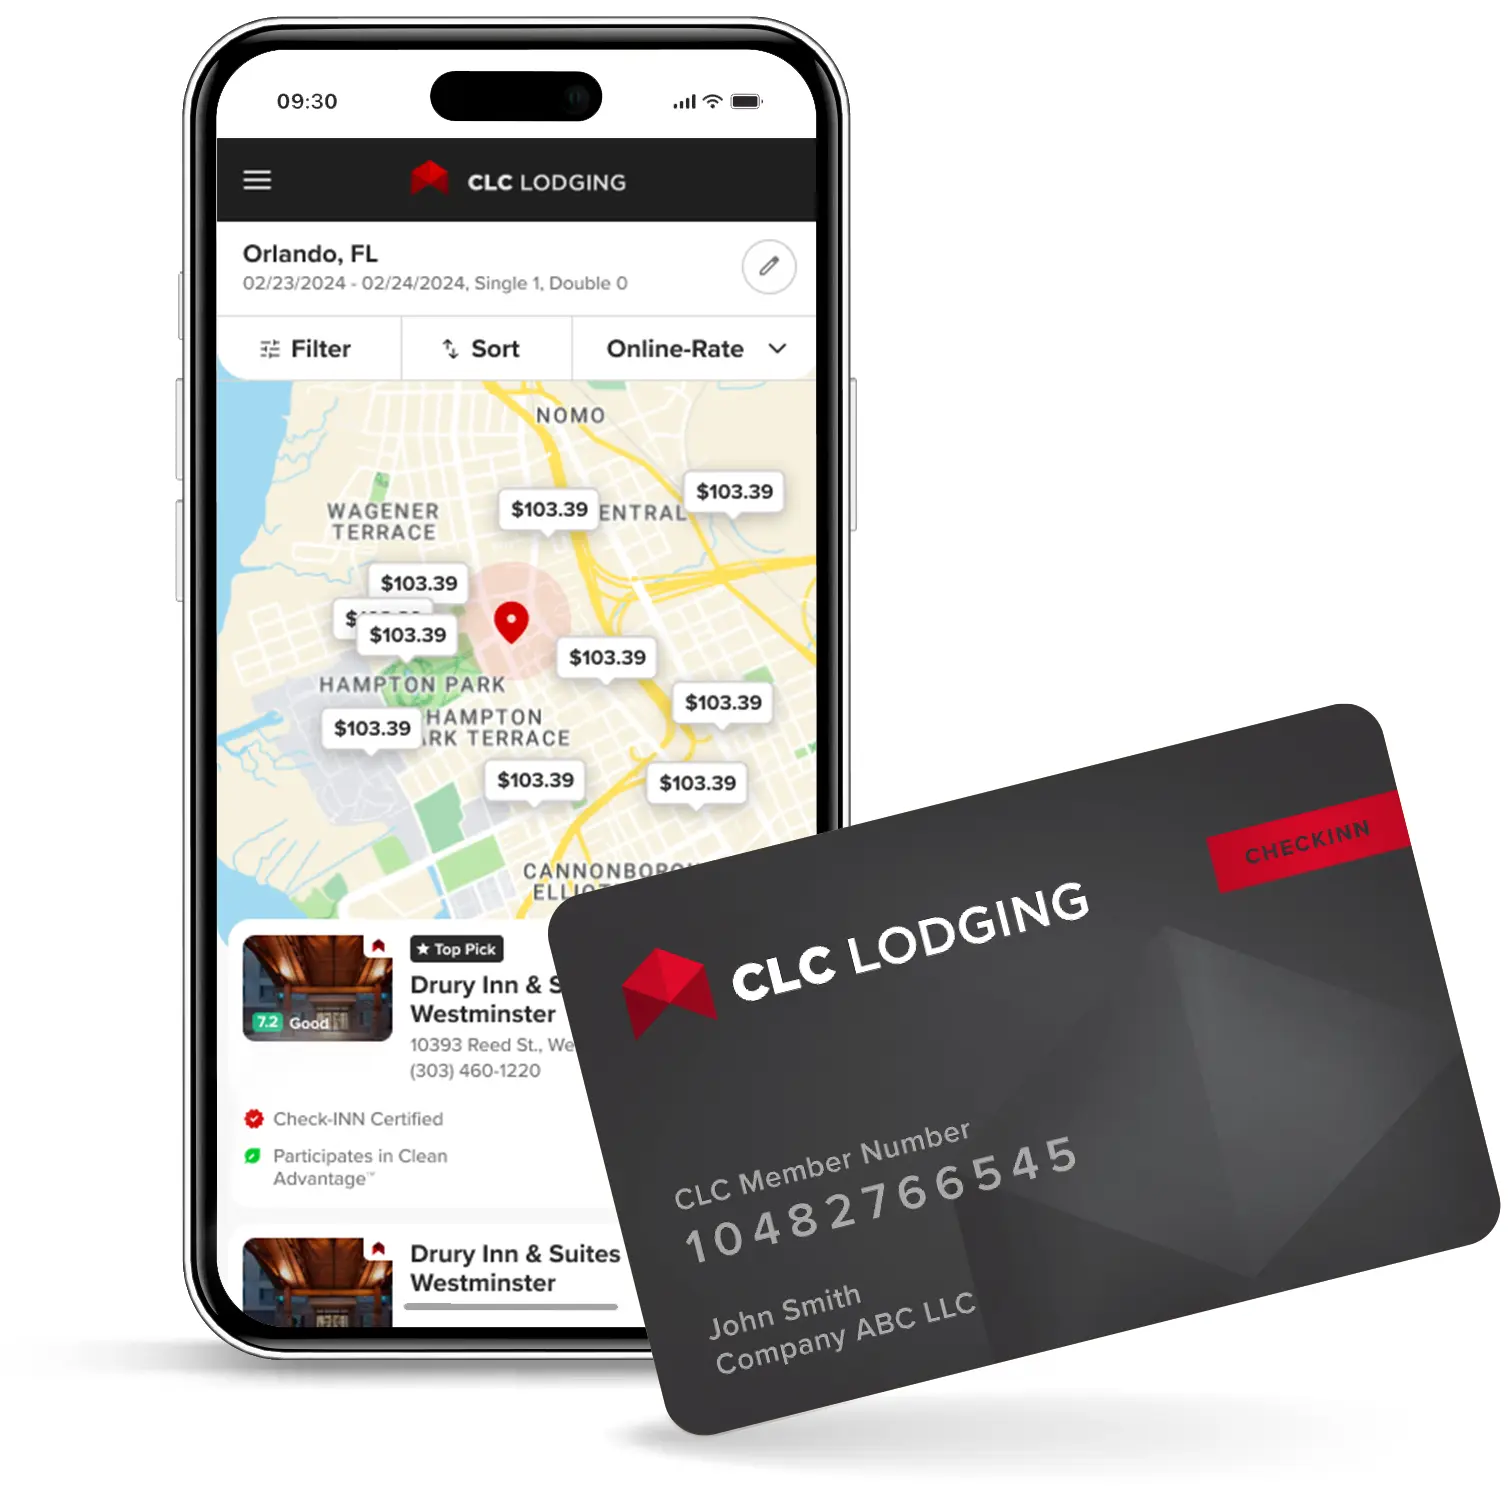 CLC Lodging web application displayed on Macbook screen.